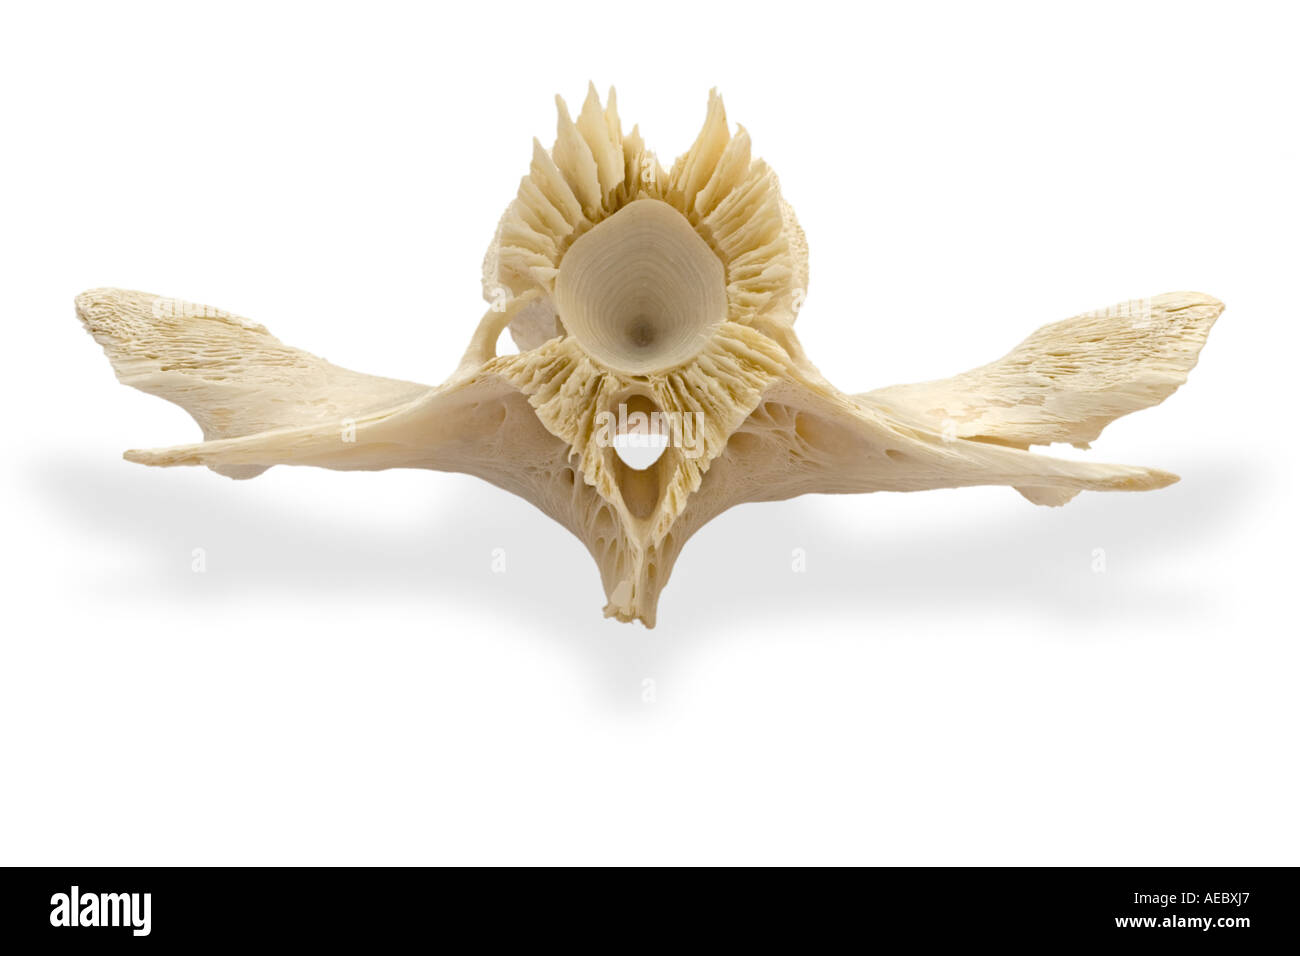 Vertebra of a Wels Catfish (Silurus glanis).  Vertèbre de silure glane (Silurus glanis). Stock Photo